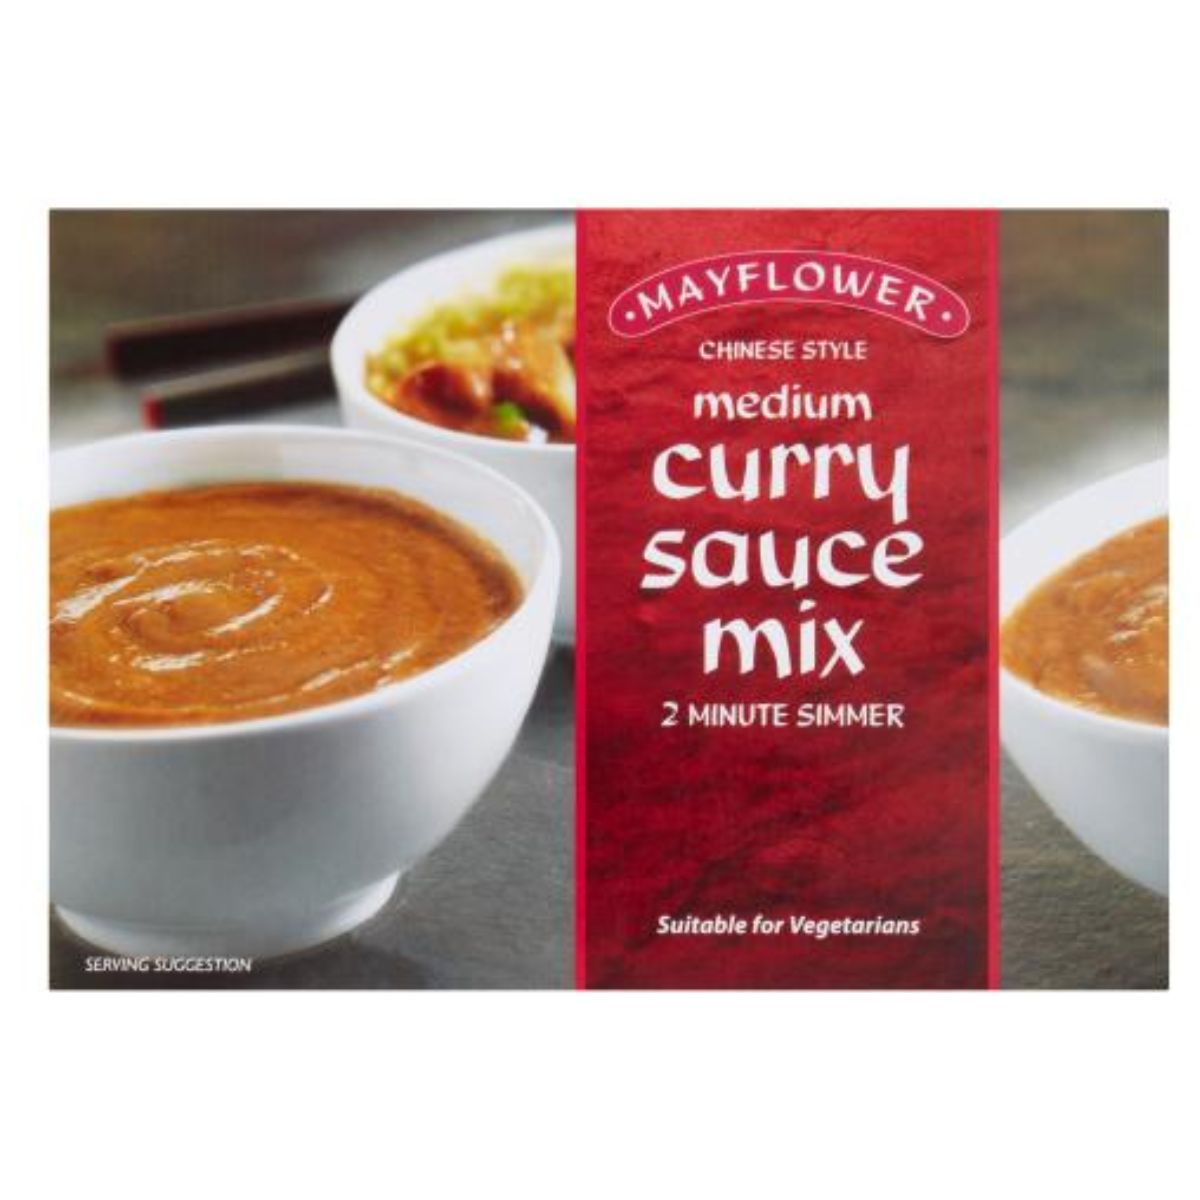 A box of Mayflower - Chinese Style Medium Curry Sauce Mix - 255g.